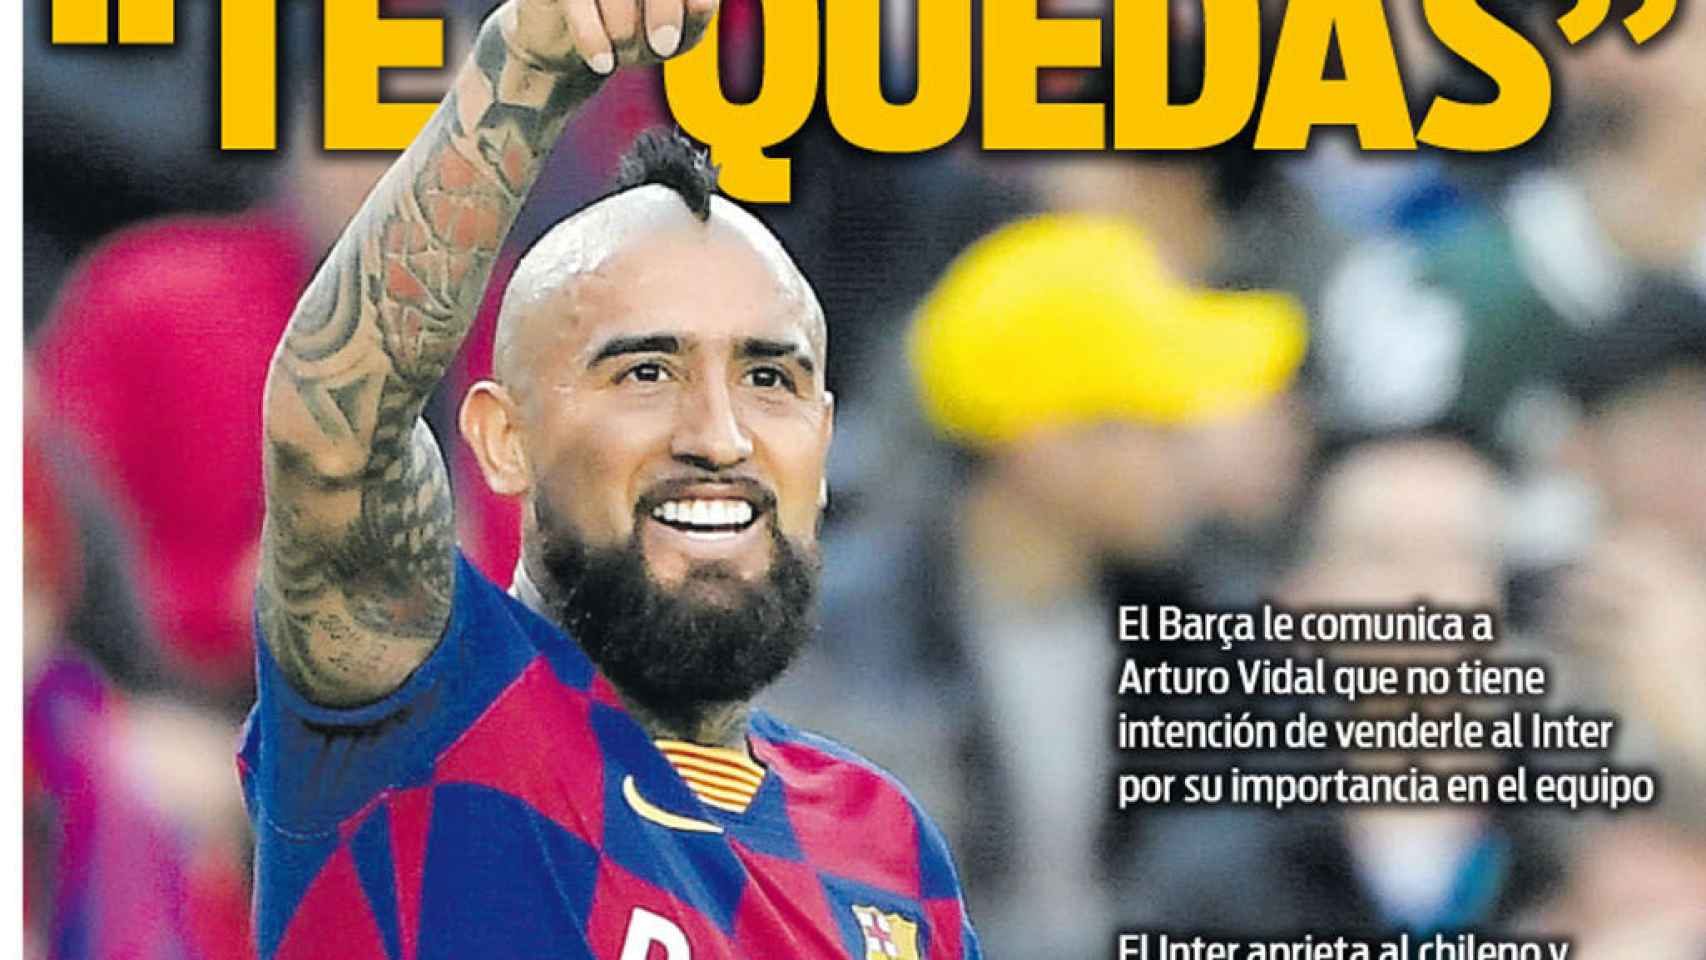 La portada del diario Sport (06/01/2019)